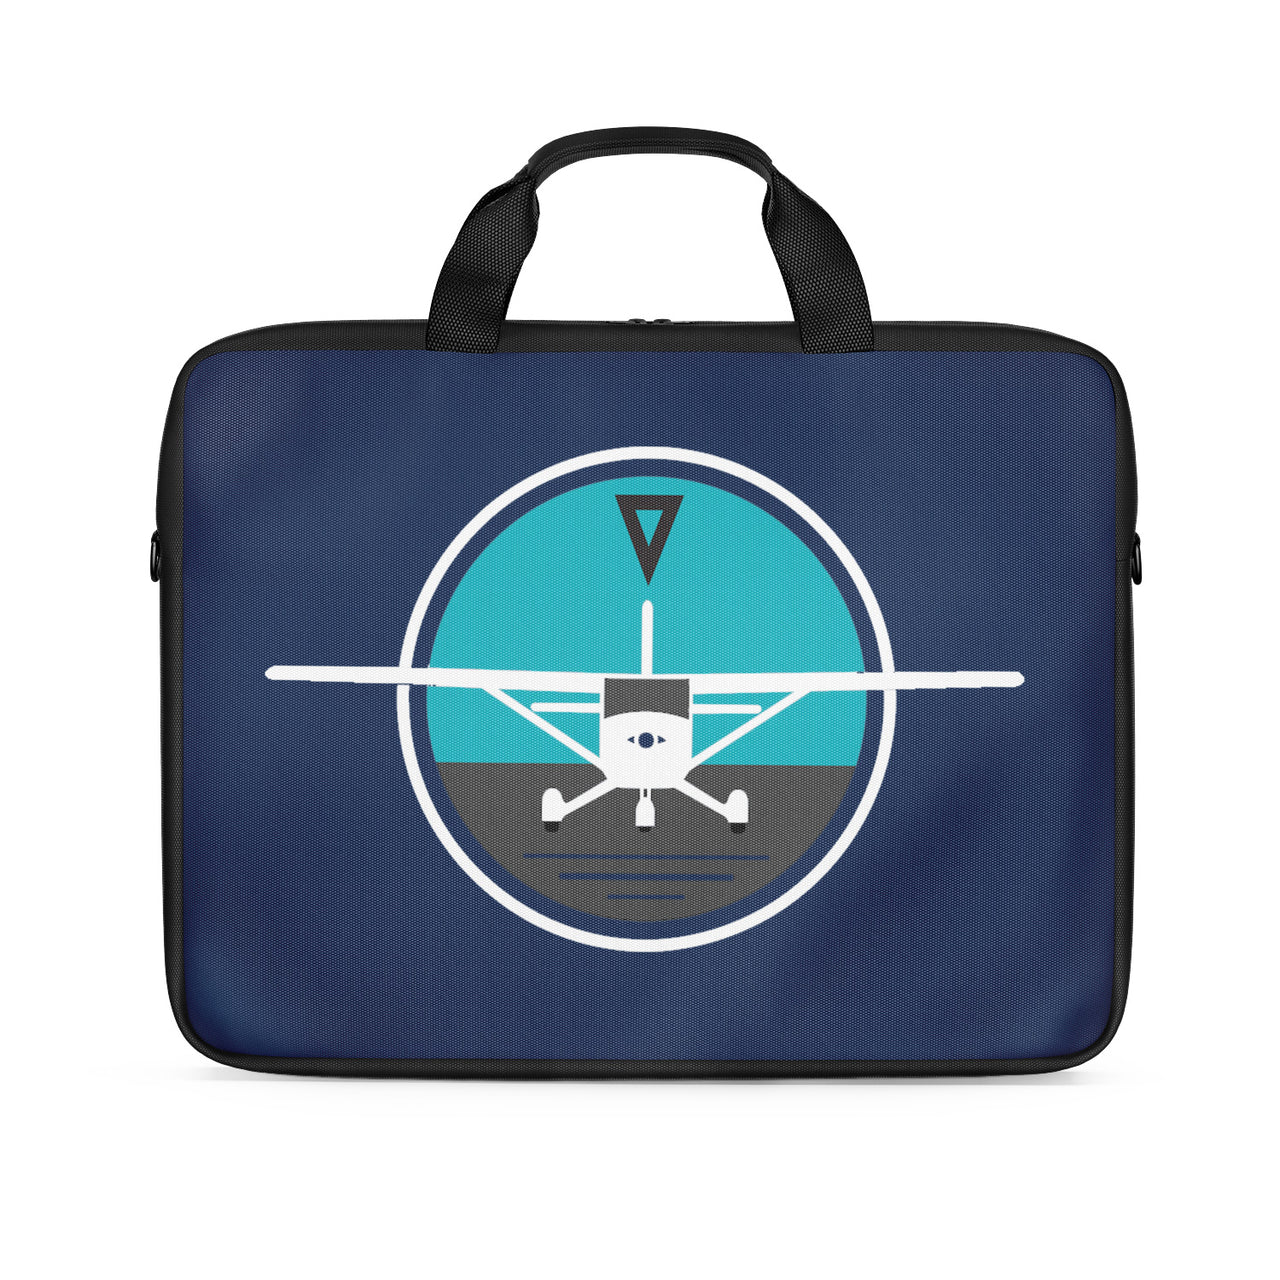 Cessna & Gyro Designed Laptop & Tablet Bags